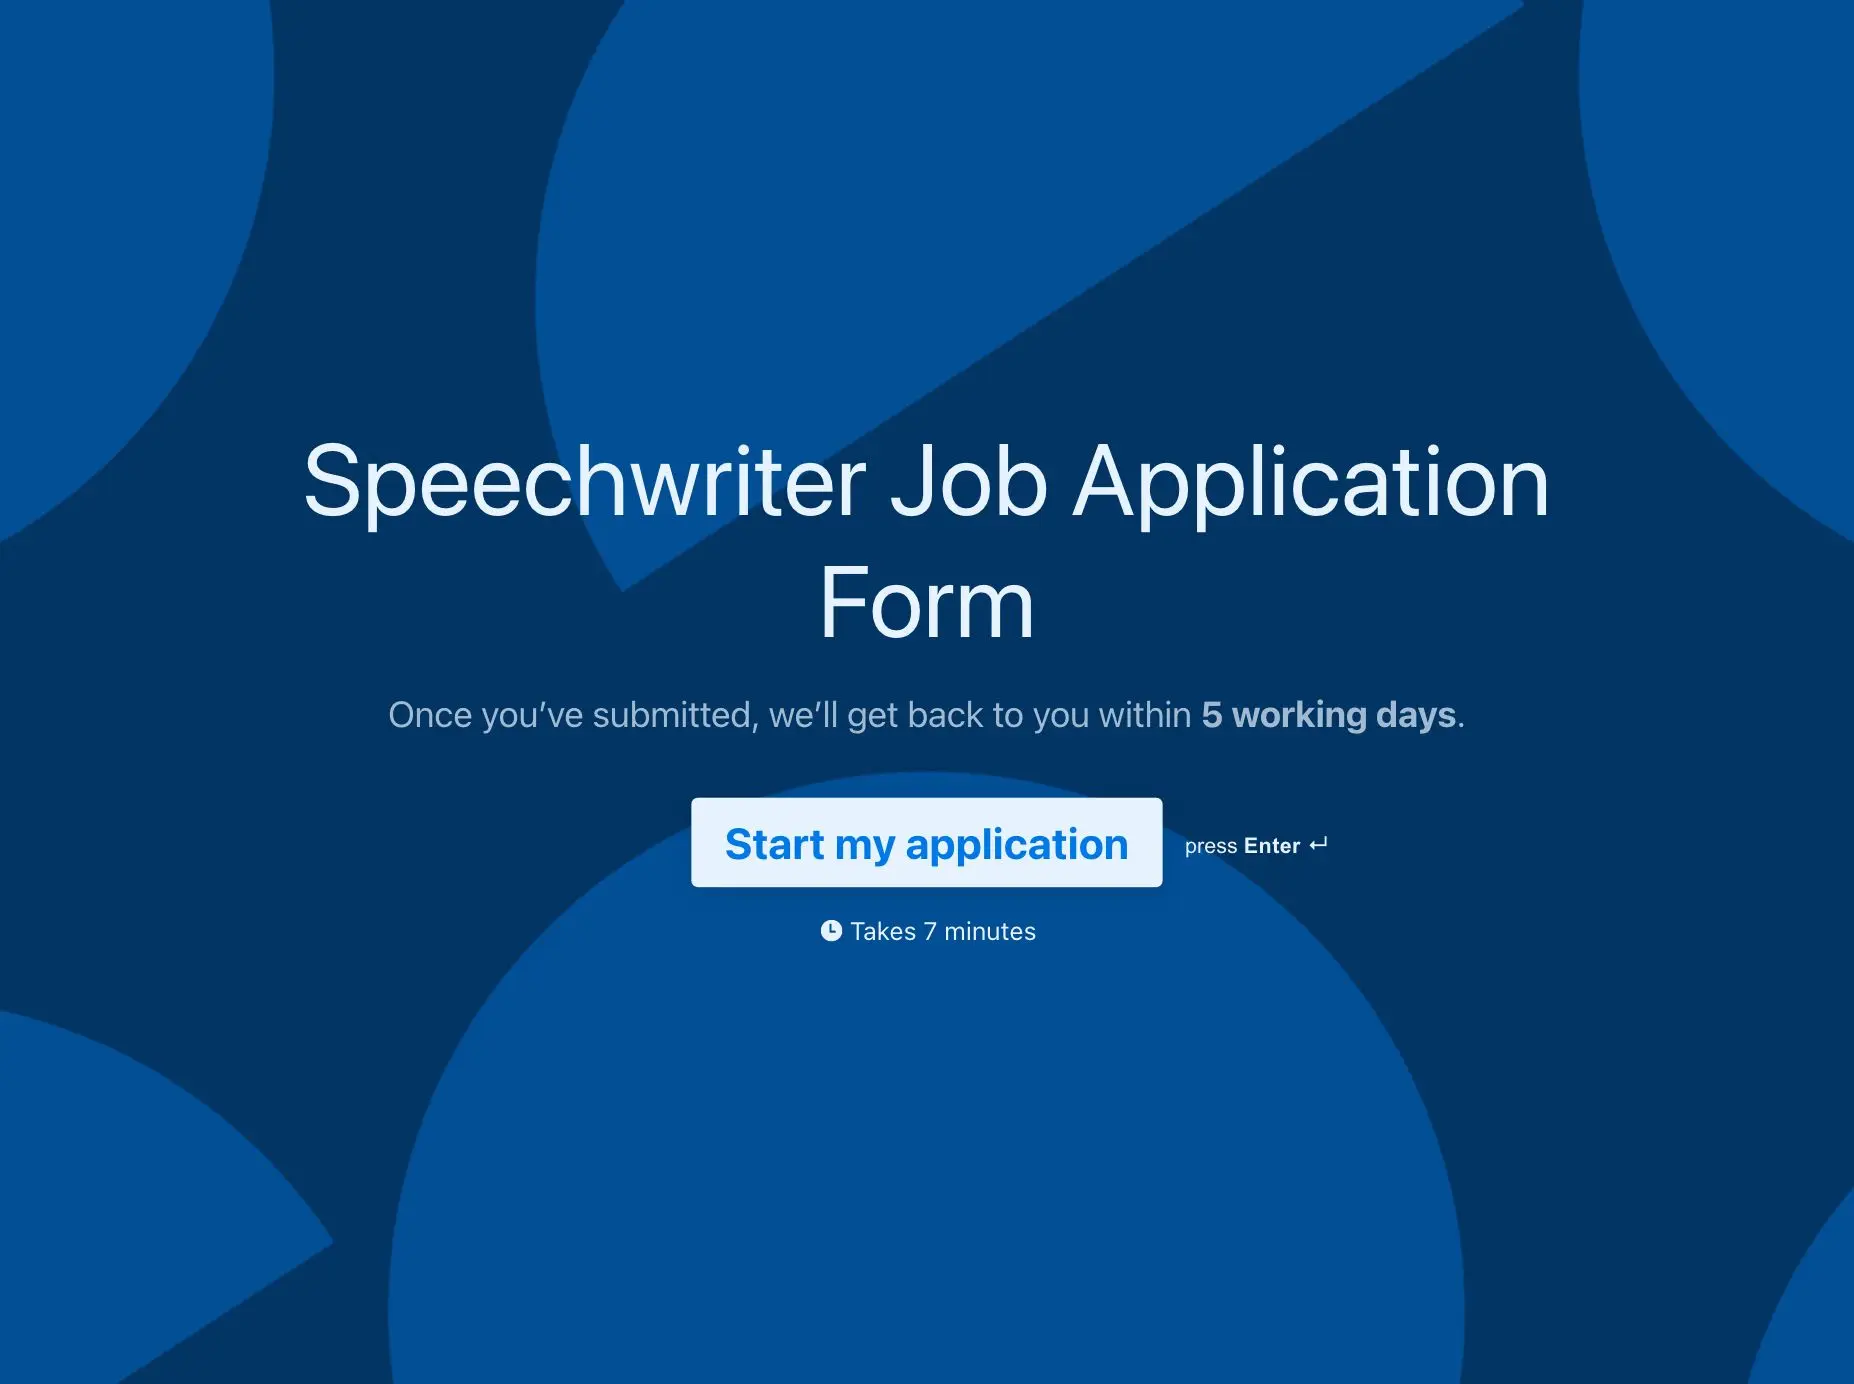 Speechwriter Job Application Form Template Hero